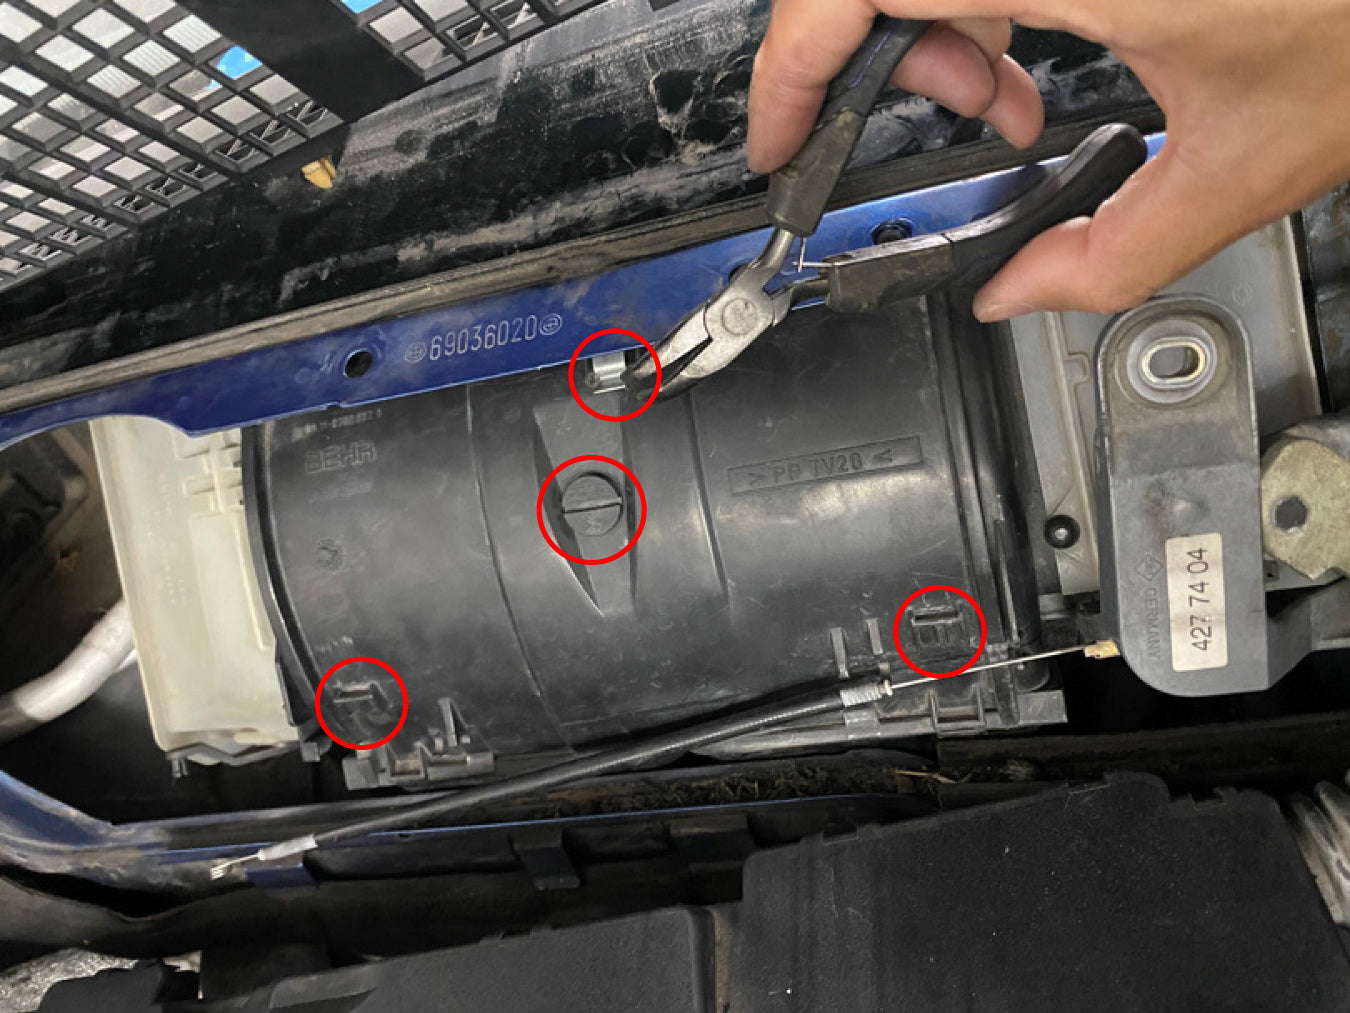 BMW E36 HVAC fan cover fastener locations circled.